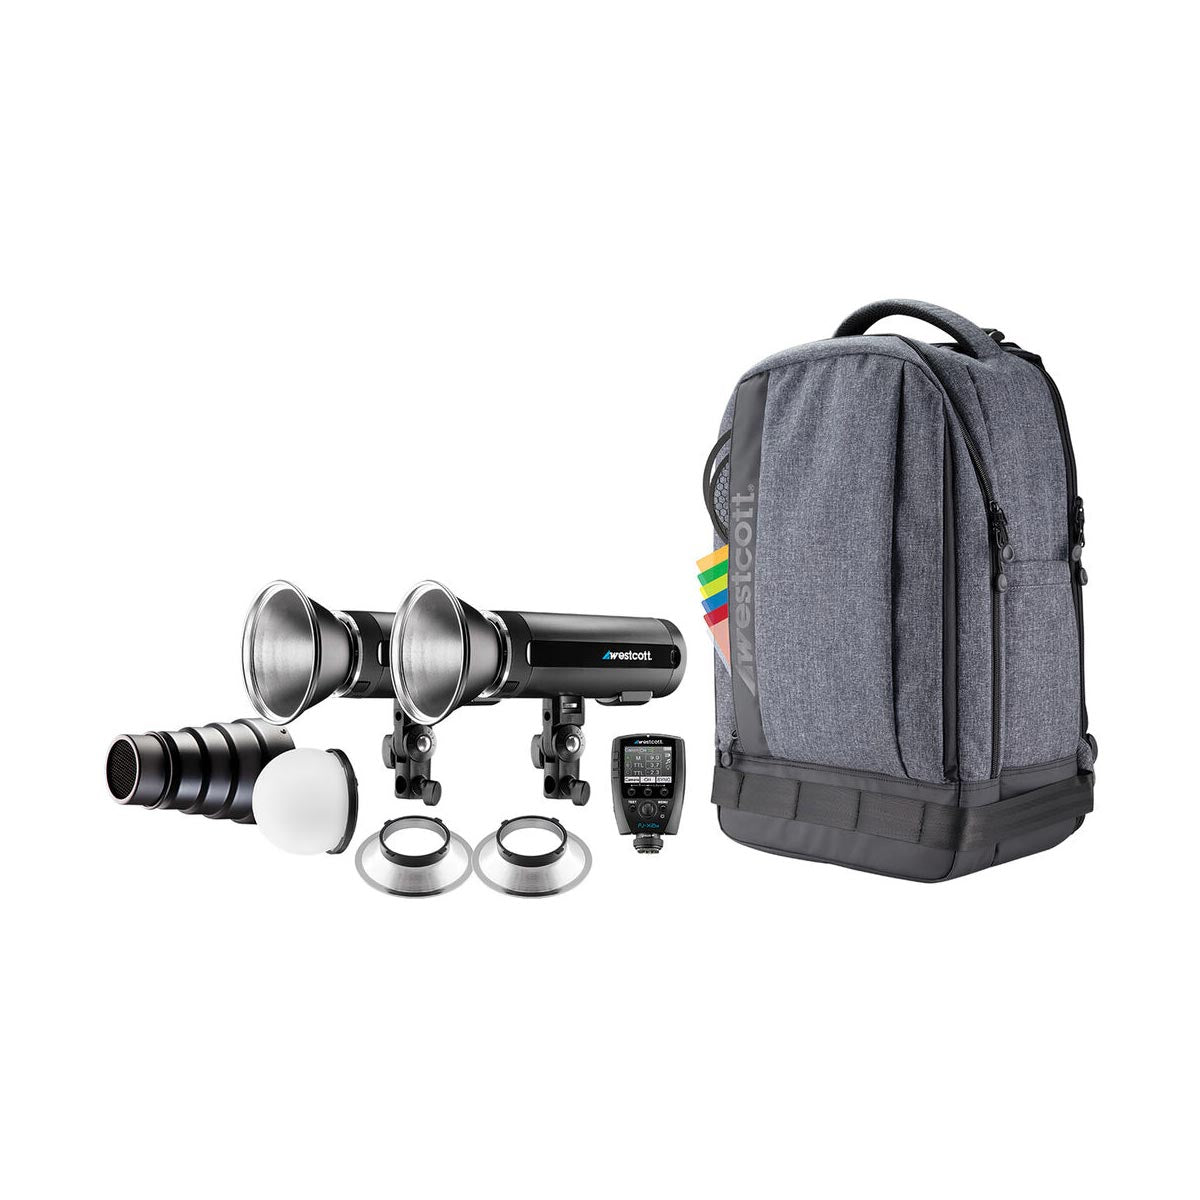 Westcott FJ200 Strobe 2-Light Backpack Kit with FJ-X2m Universal Wireless Trigger and Accessories